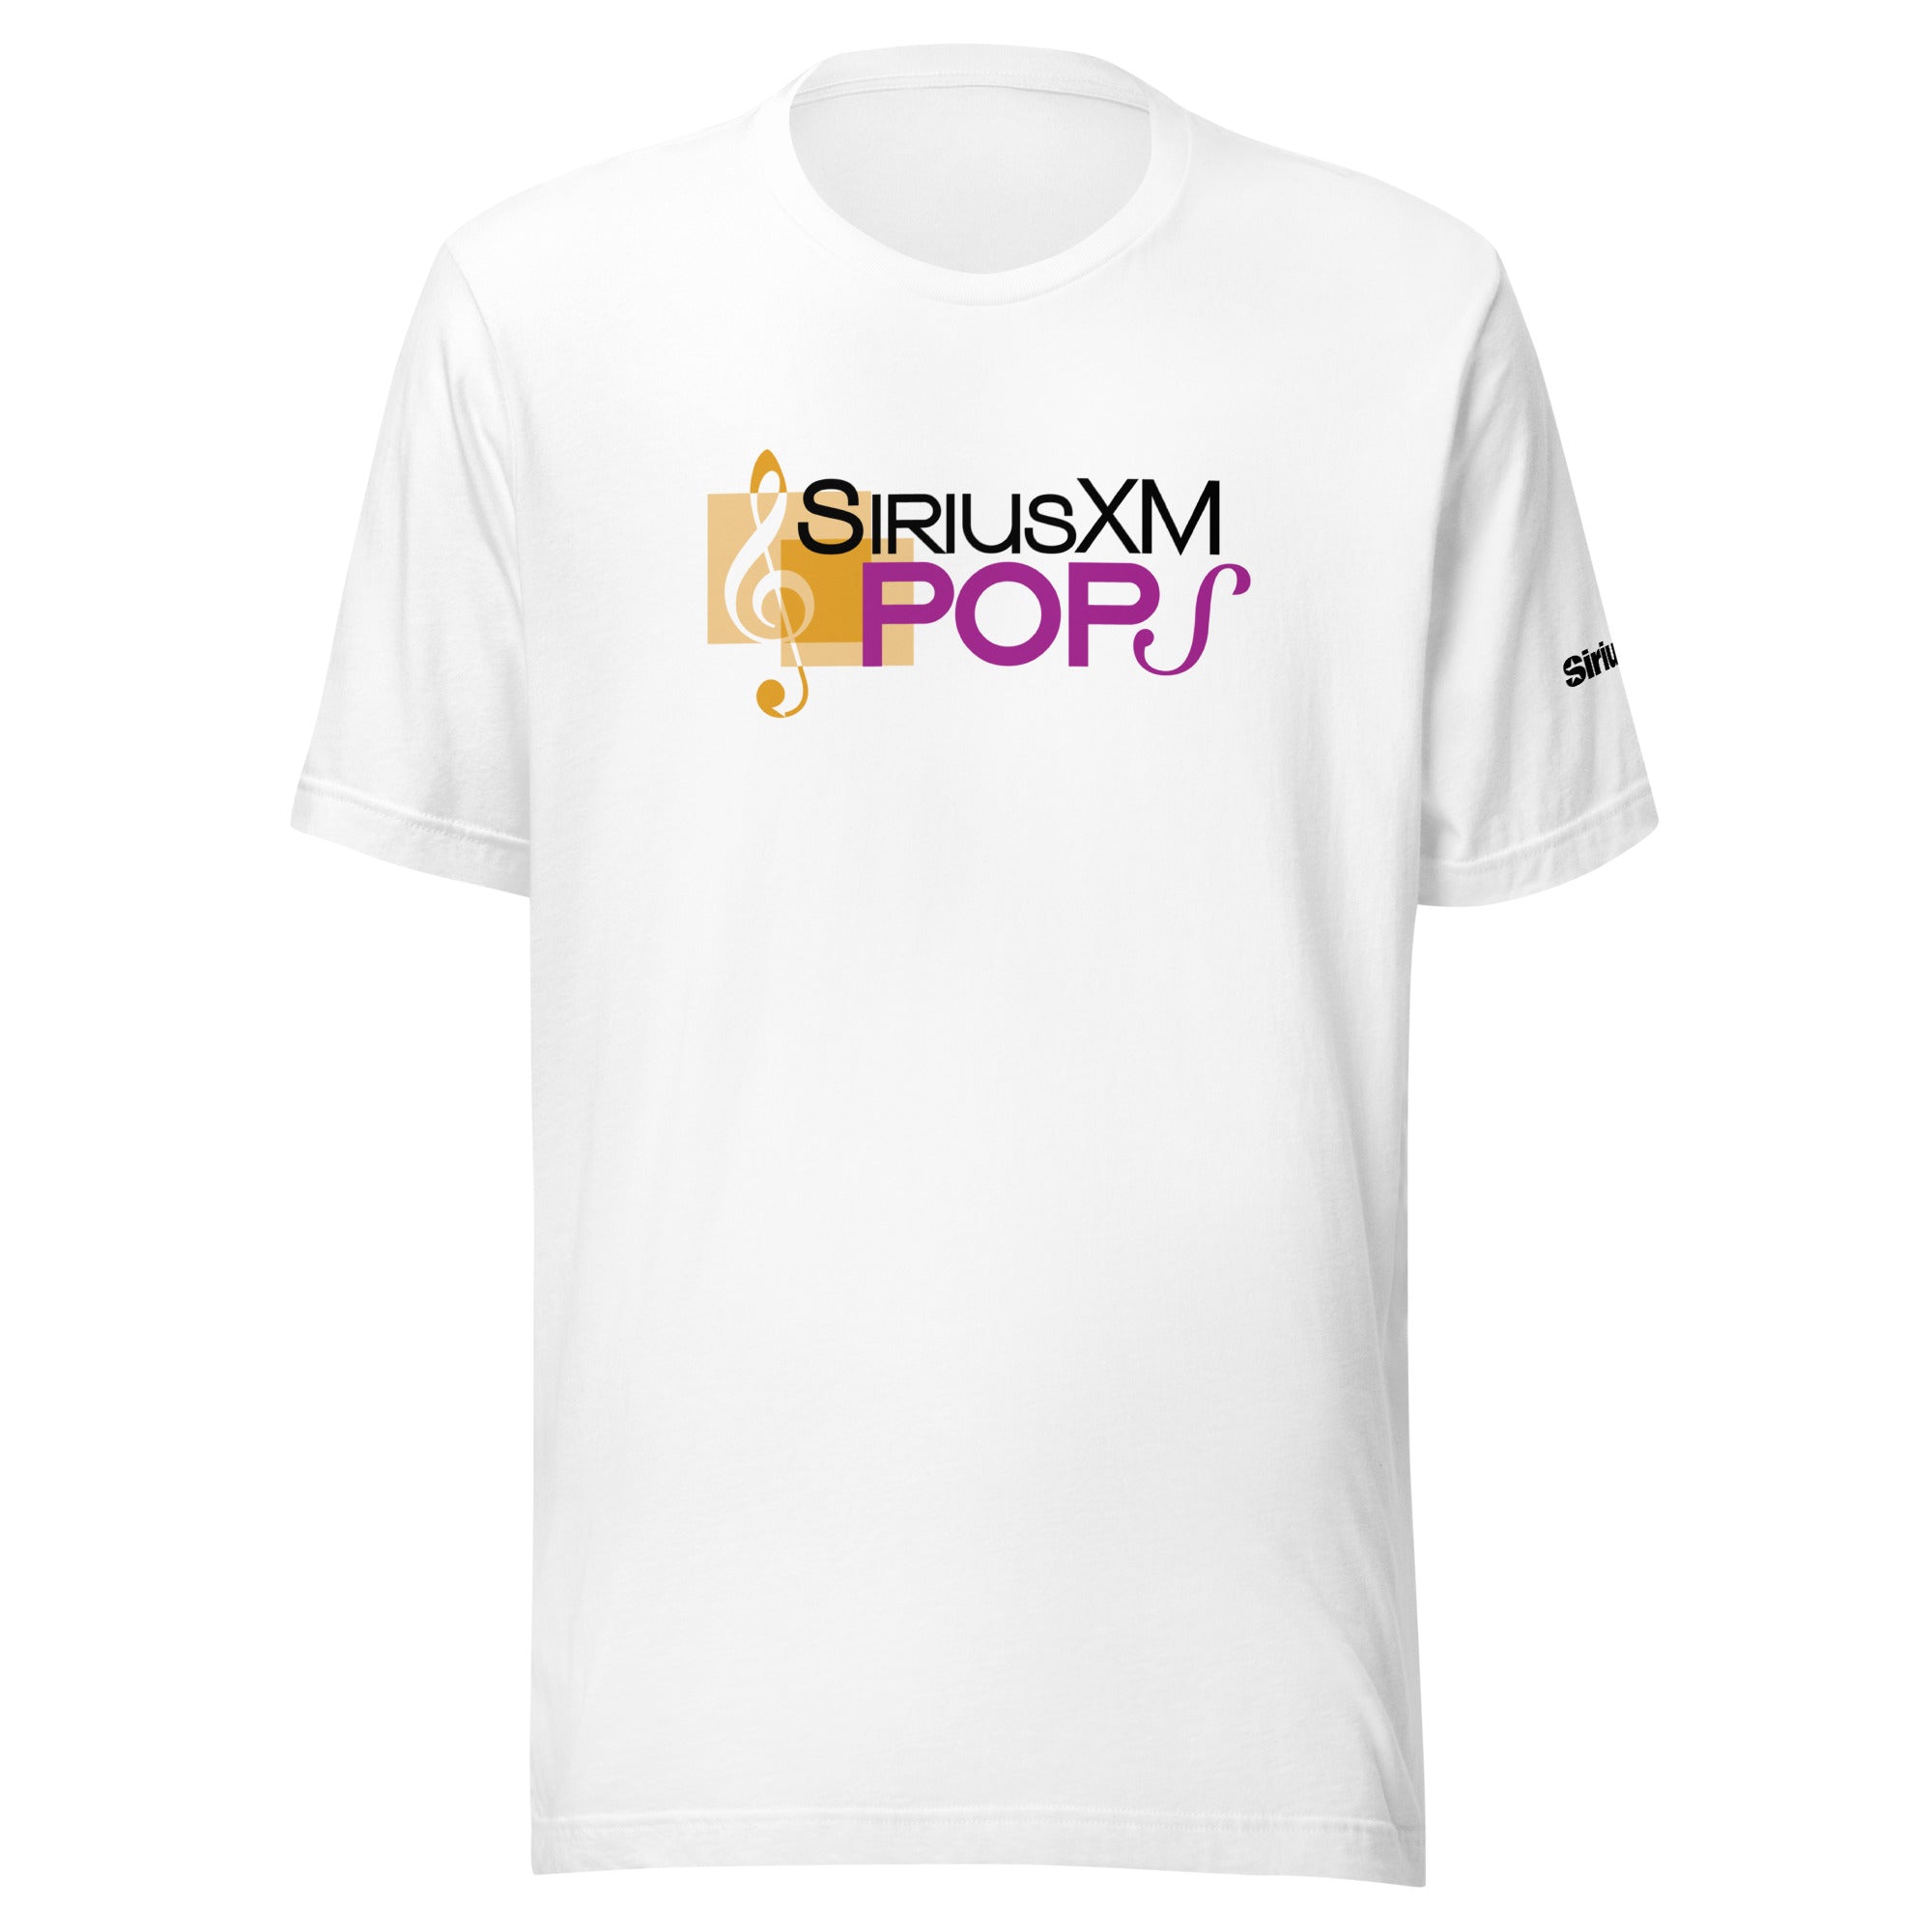 SiriusXM Pops: T-shirt (White)